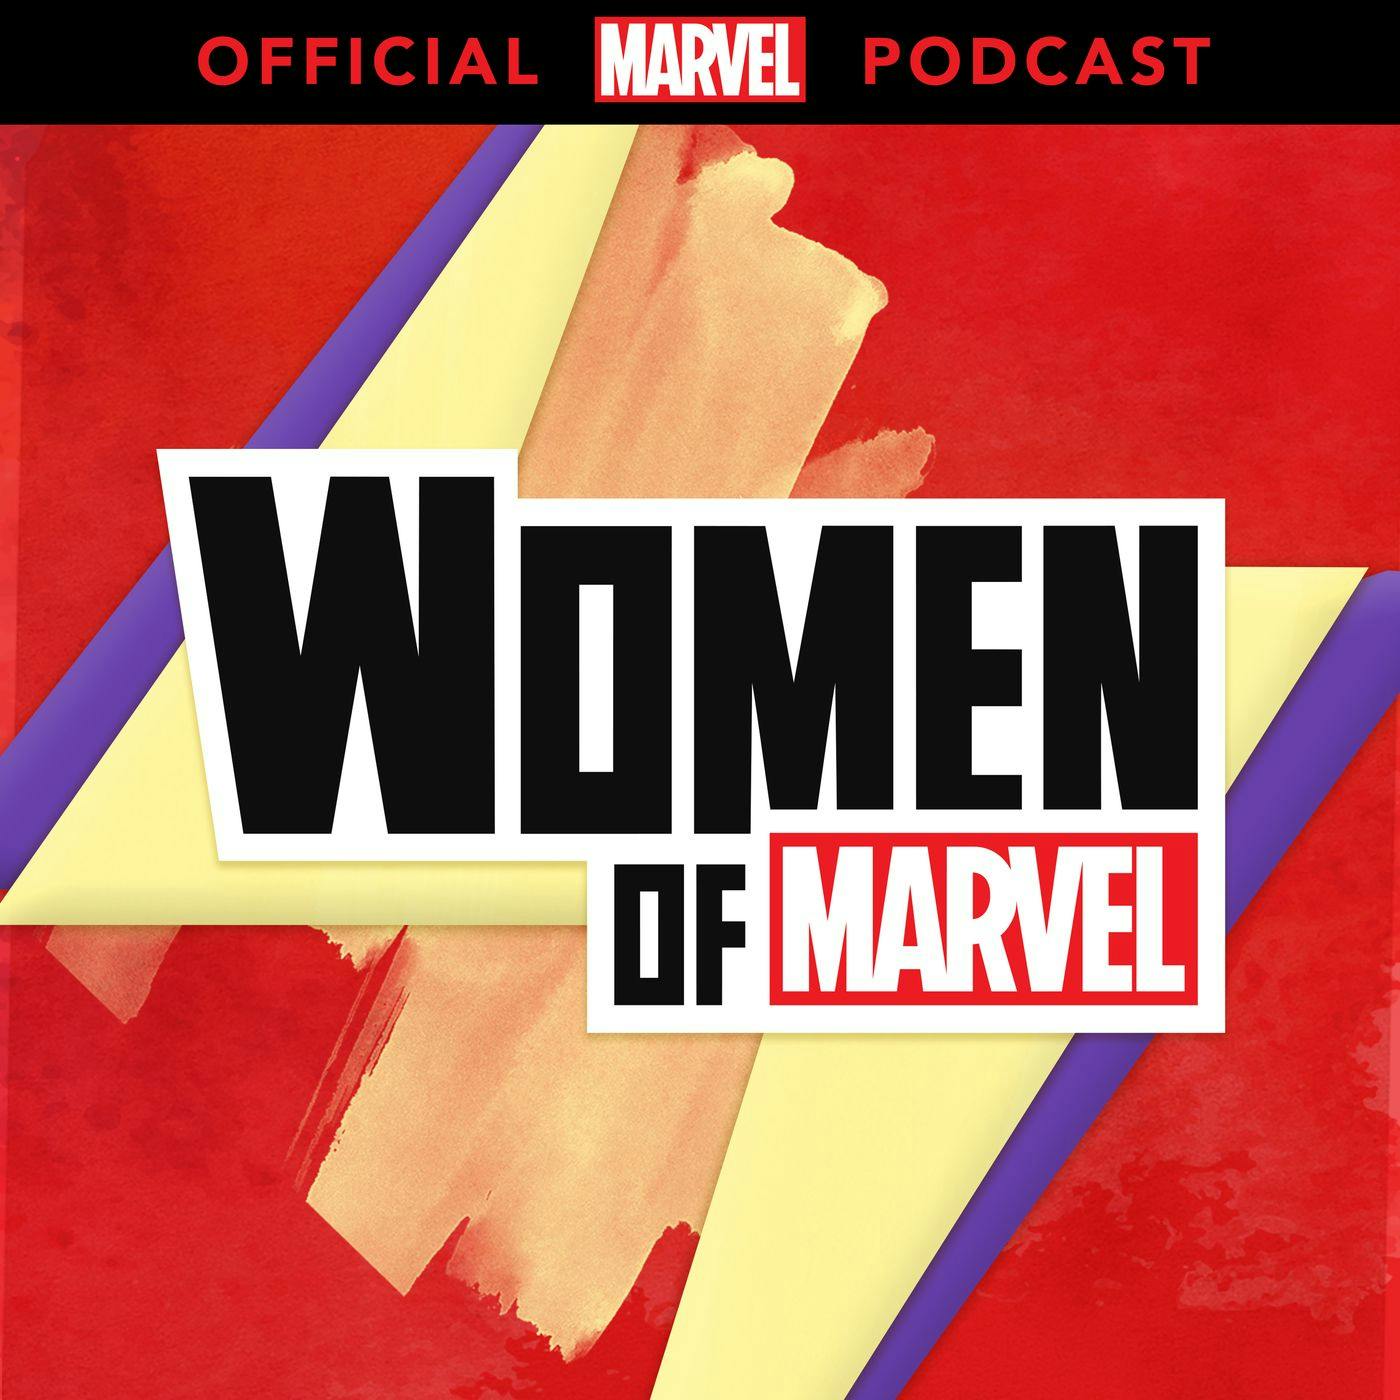 Ep 112 - Ashley Eckstein joins the Women of Marvel